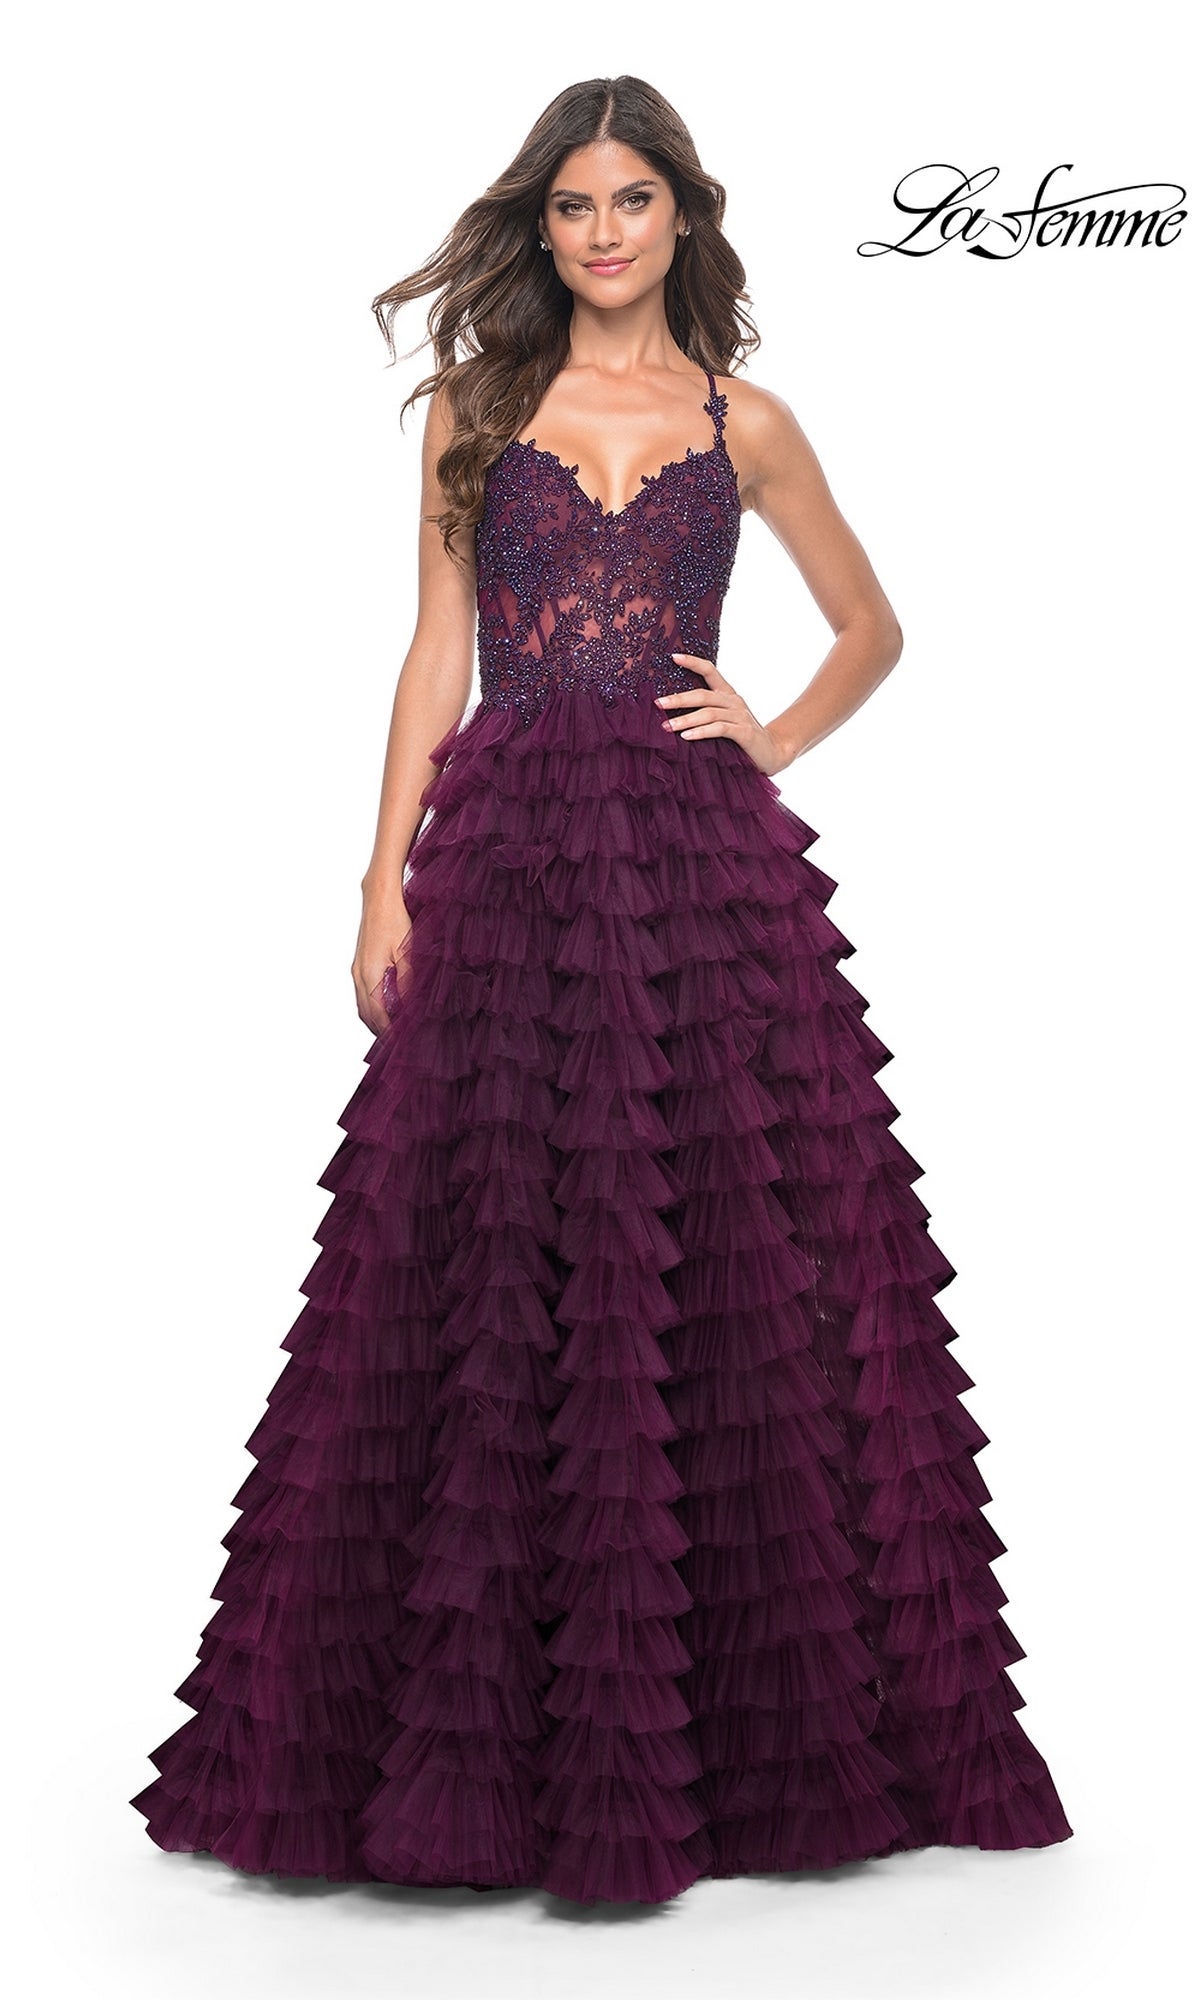  La Femme 32128 Formal Prom Dress